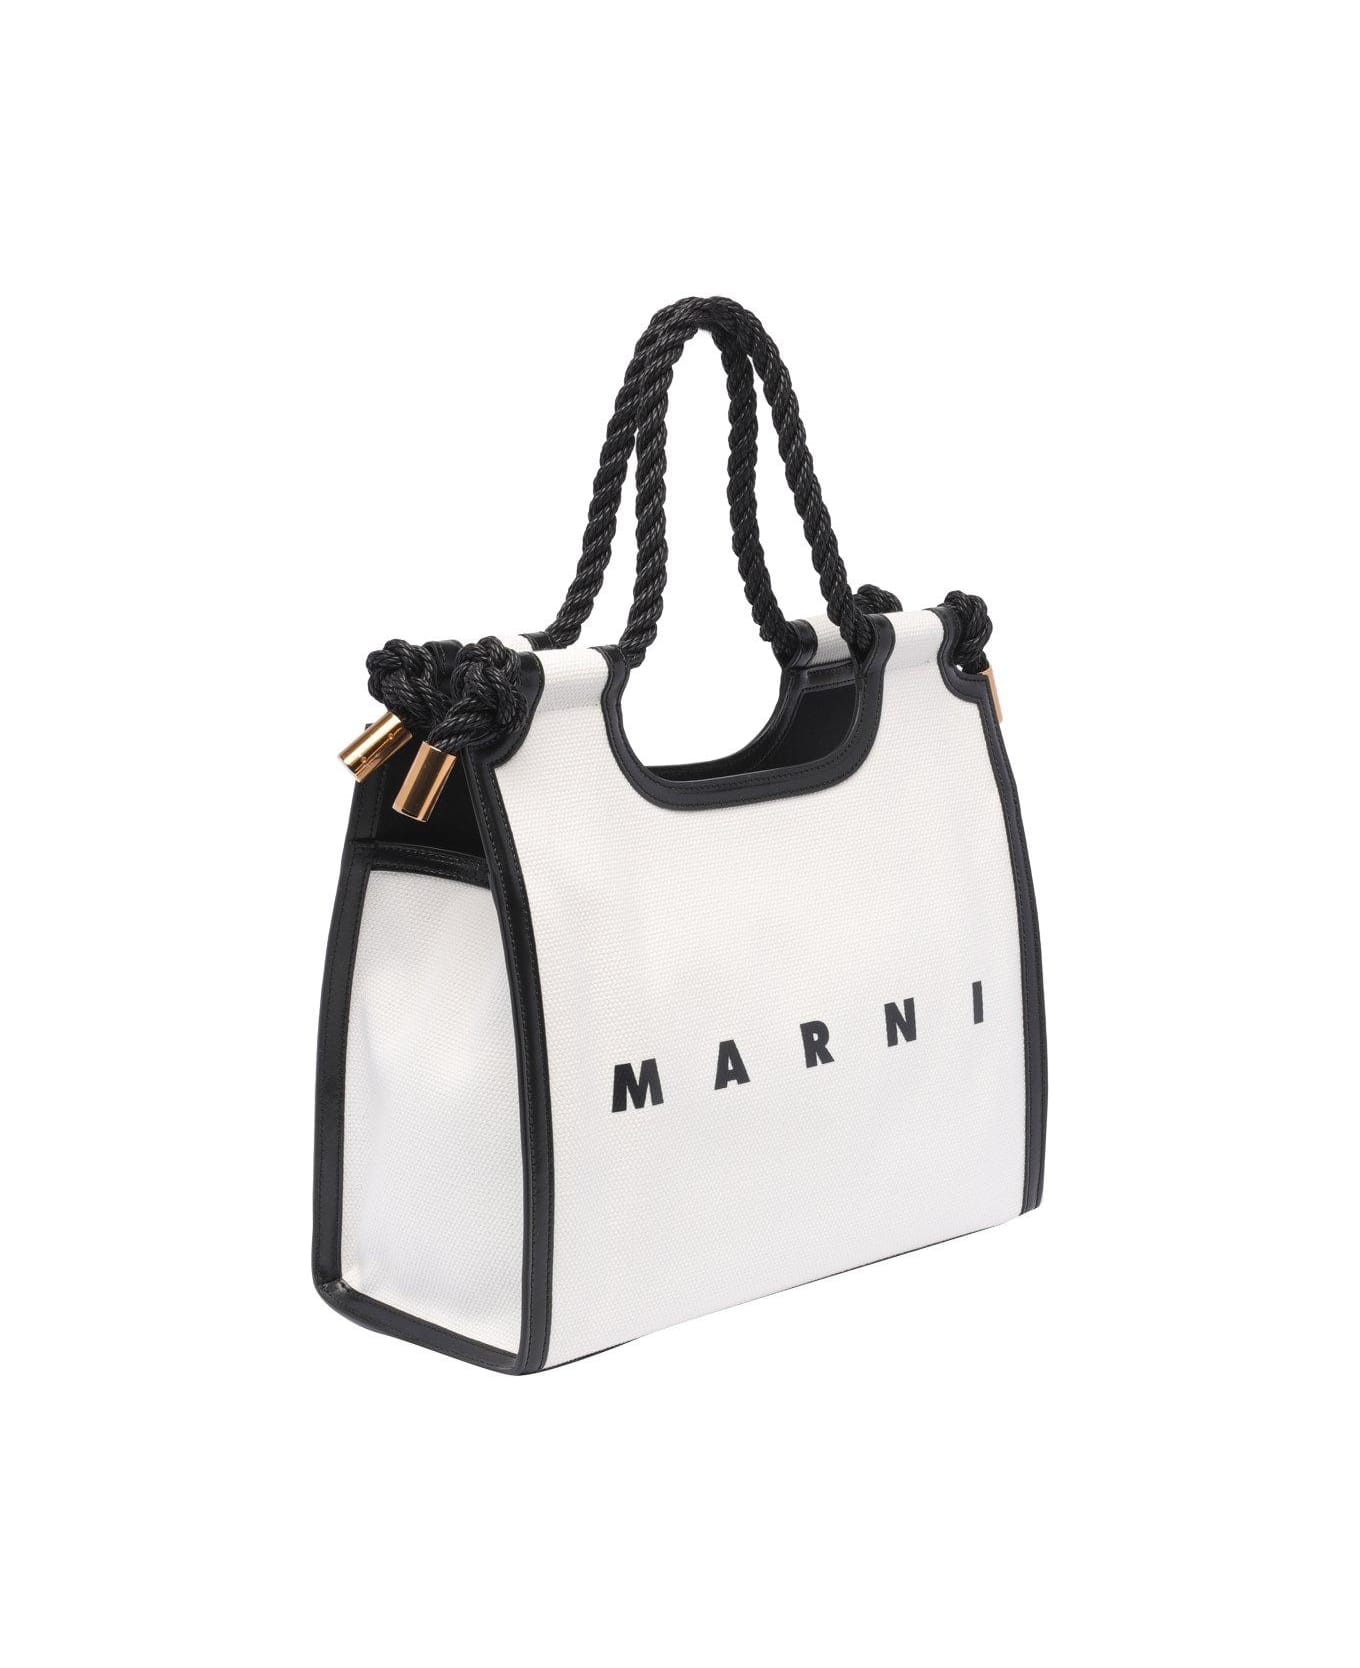 Marni Marcel Logo Printed Tote Bag - Bianco/nero トートバッグ